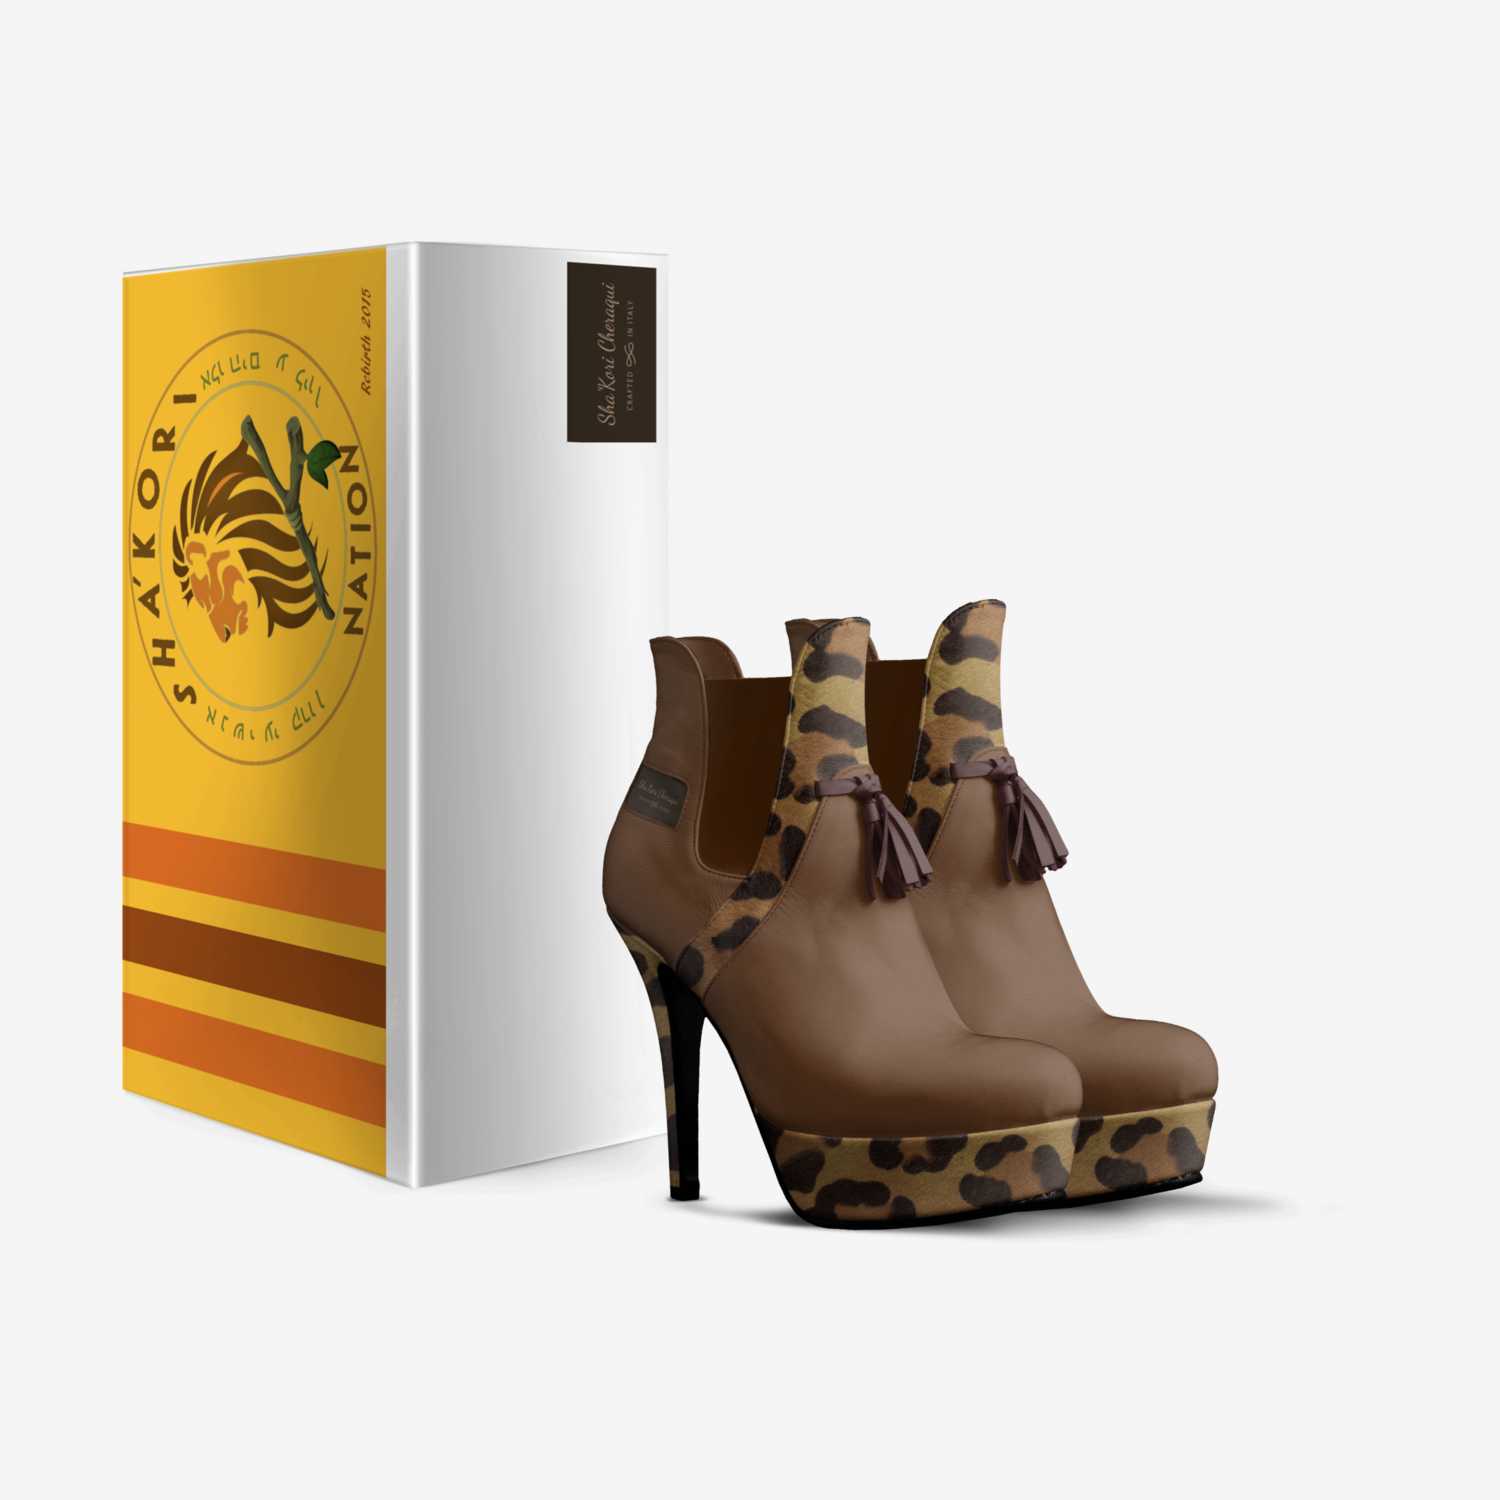 Sha'Kori Cheraqui custom made in Italy shoes by Sha'Kori Kingdom Commonwealth | Box view